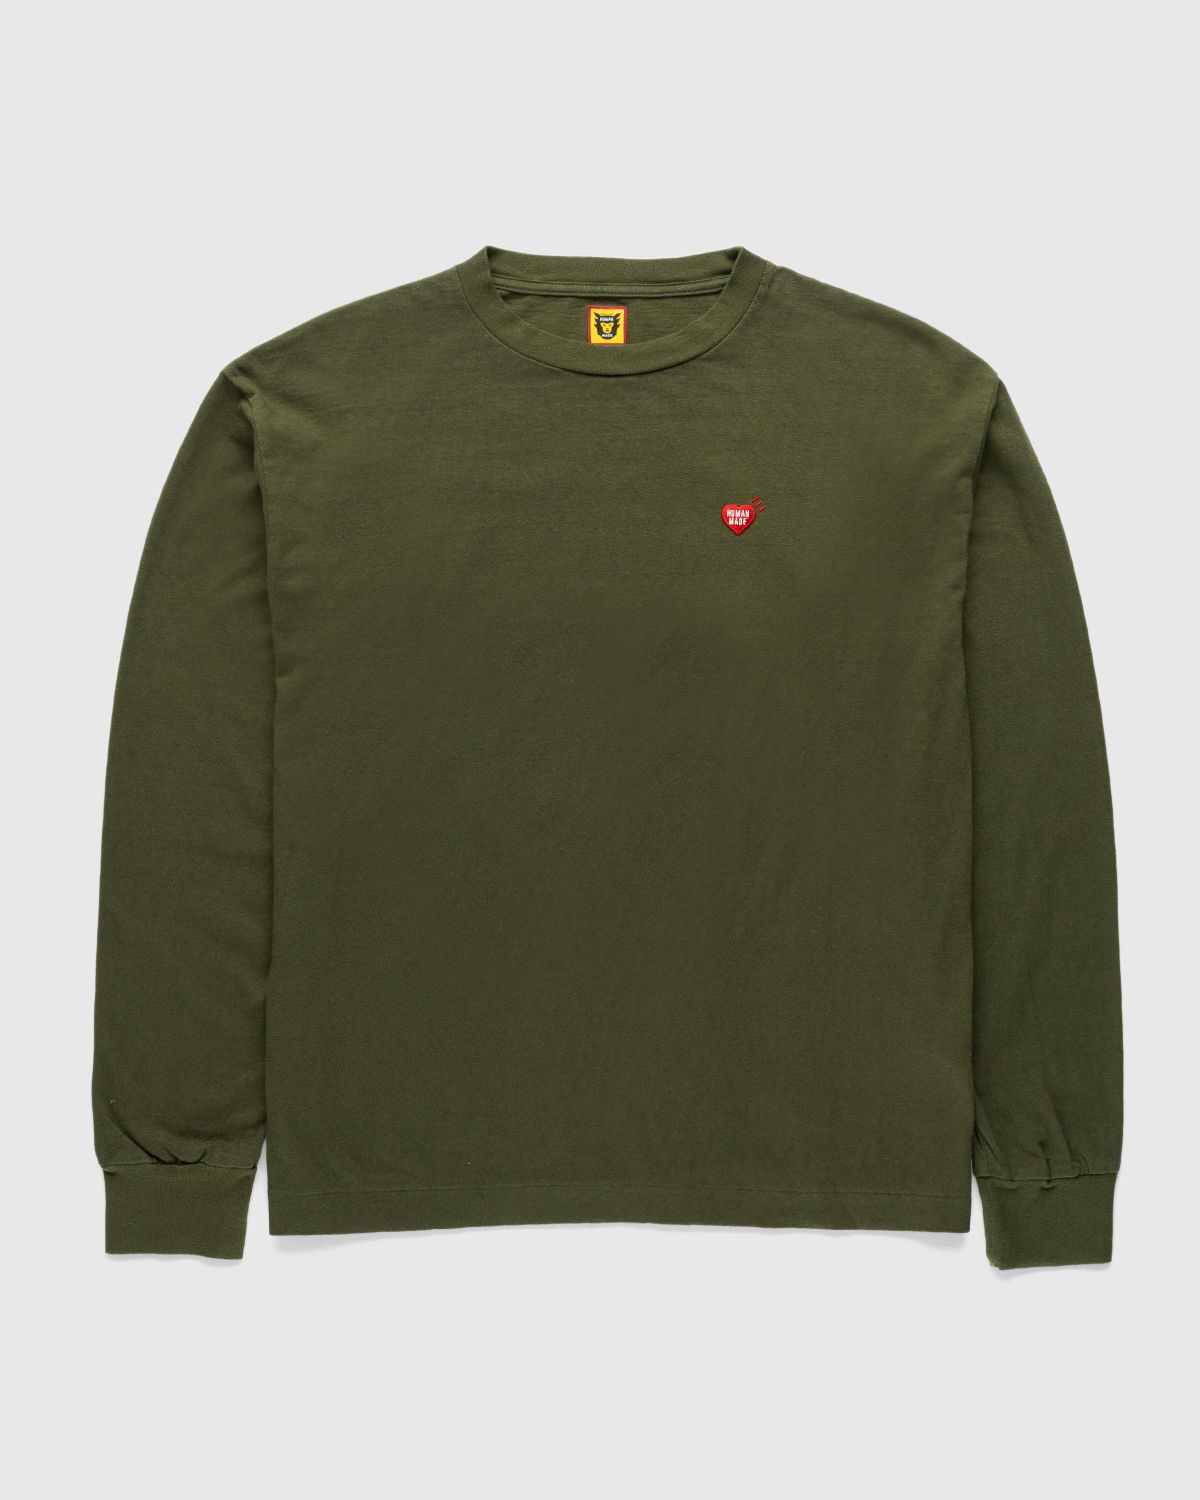 Human Made – Graphic Long-Sleeve T-Shirt Olive Drab